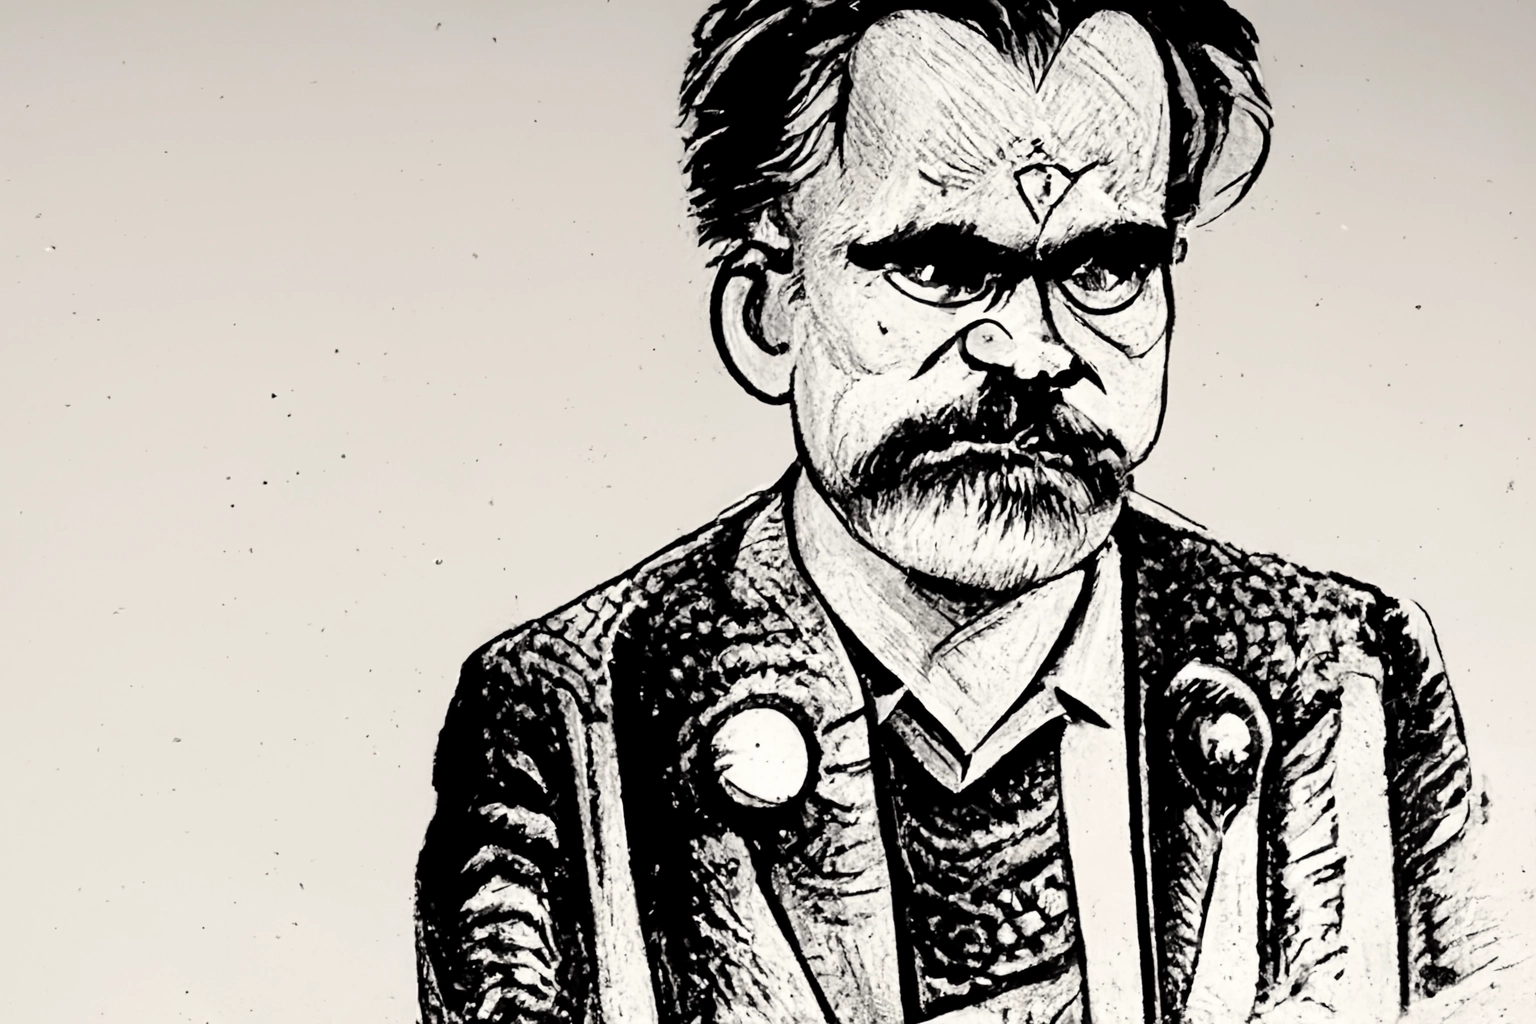 image of Friedrich Nietzsche standing there